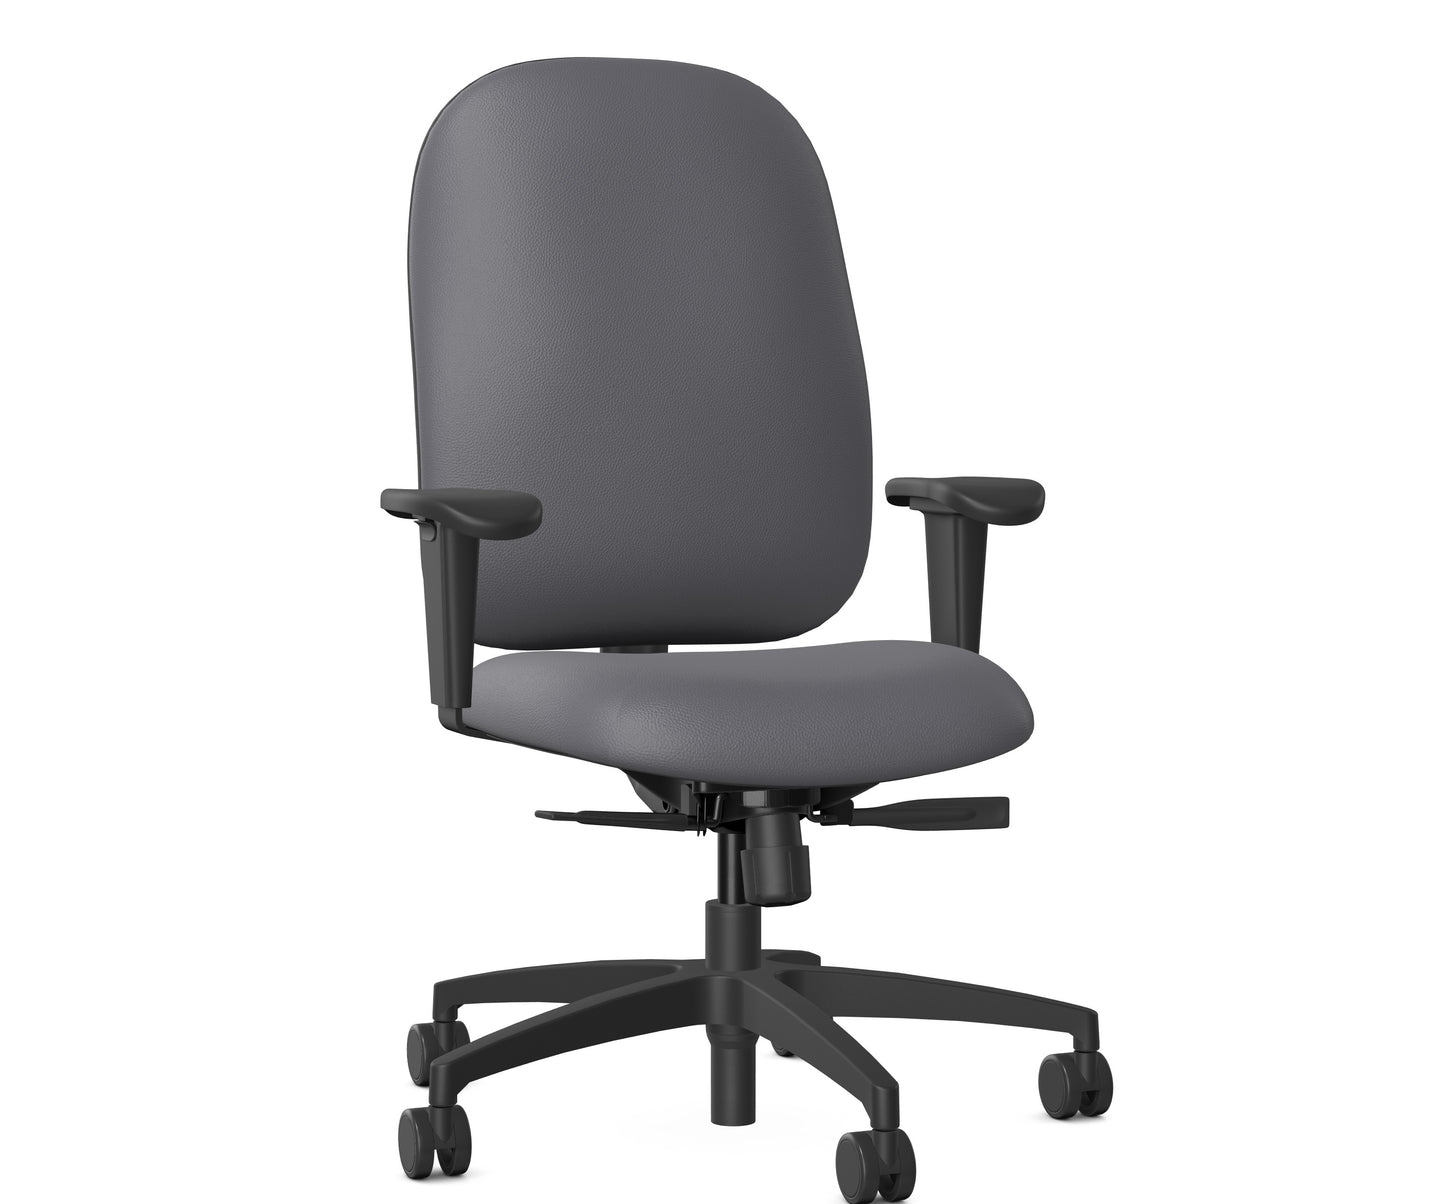 Presto High-Back Office Chair